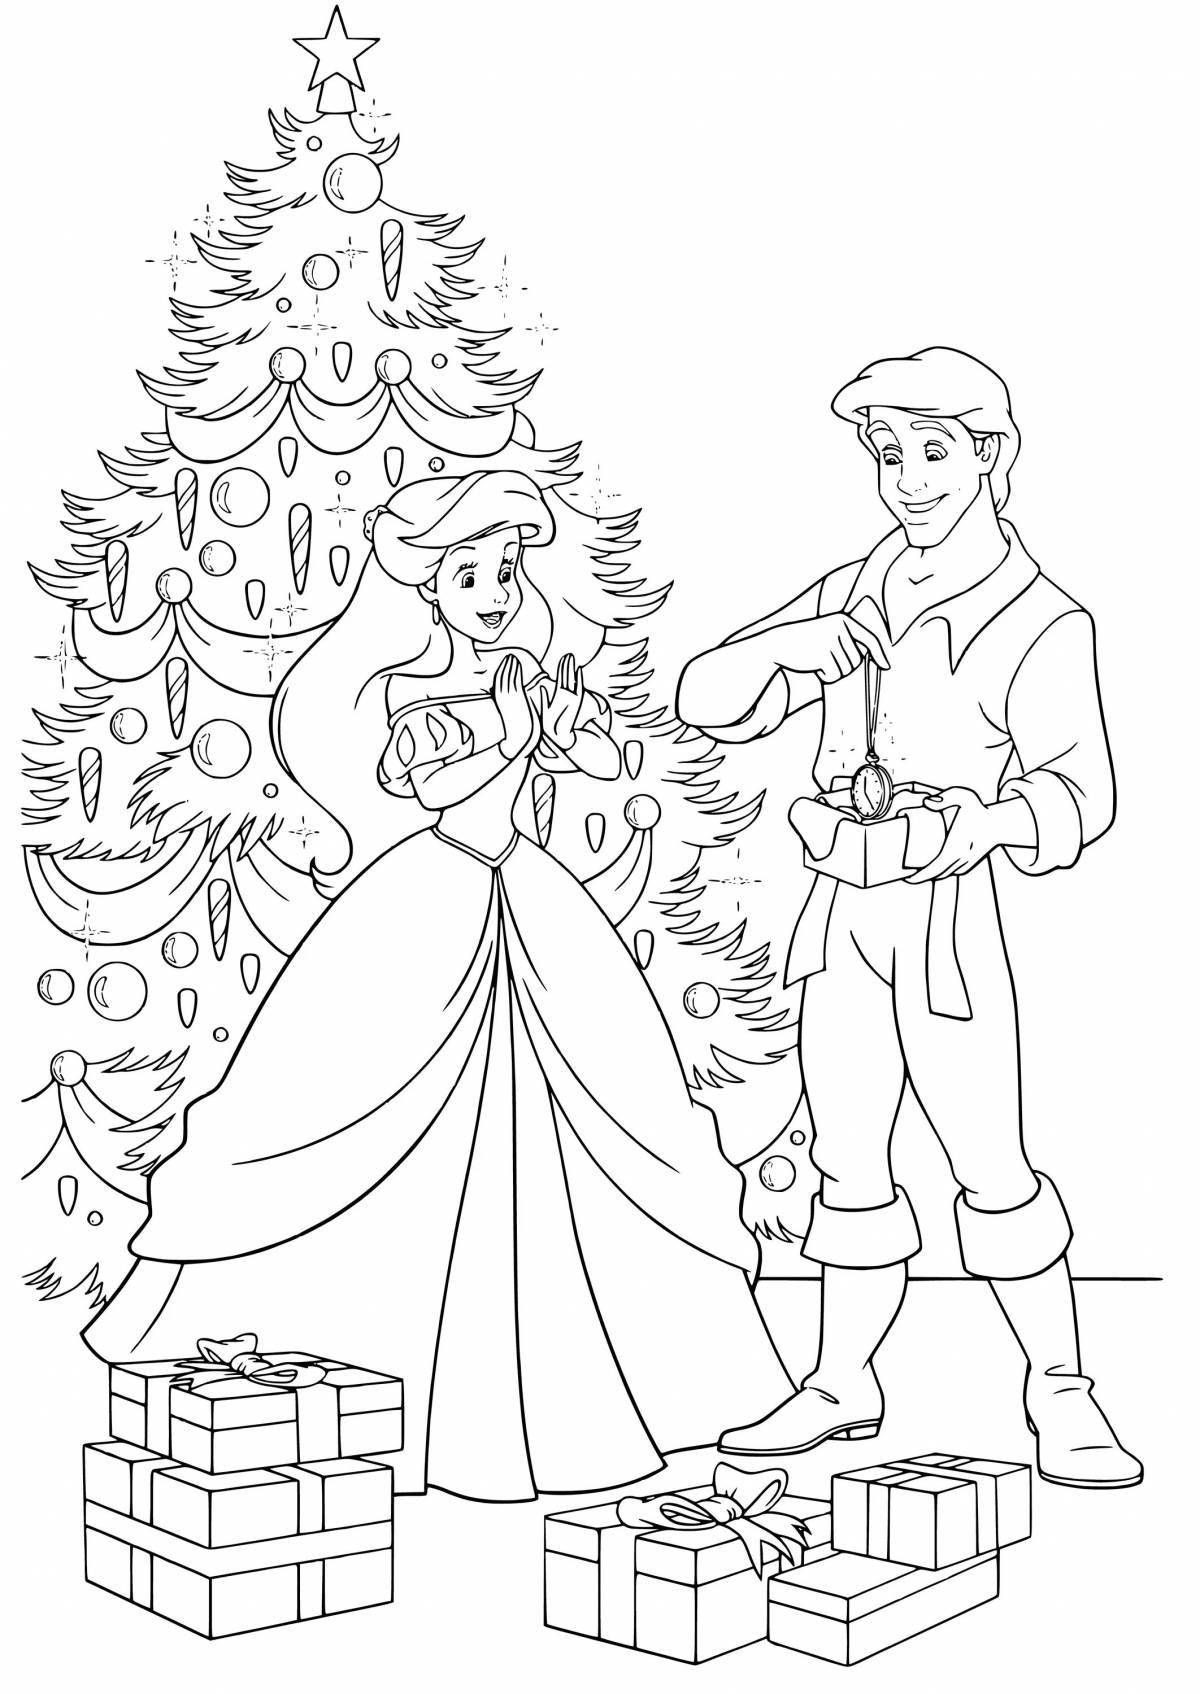 Disney's magical Christmas coloring book